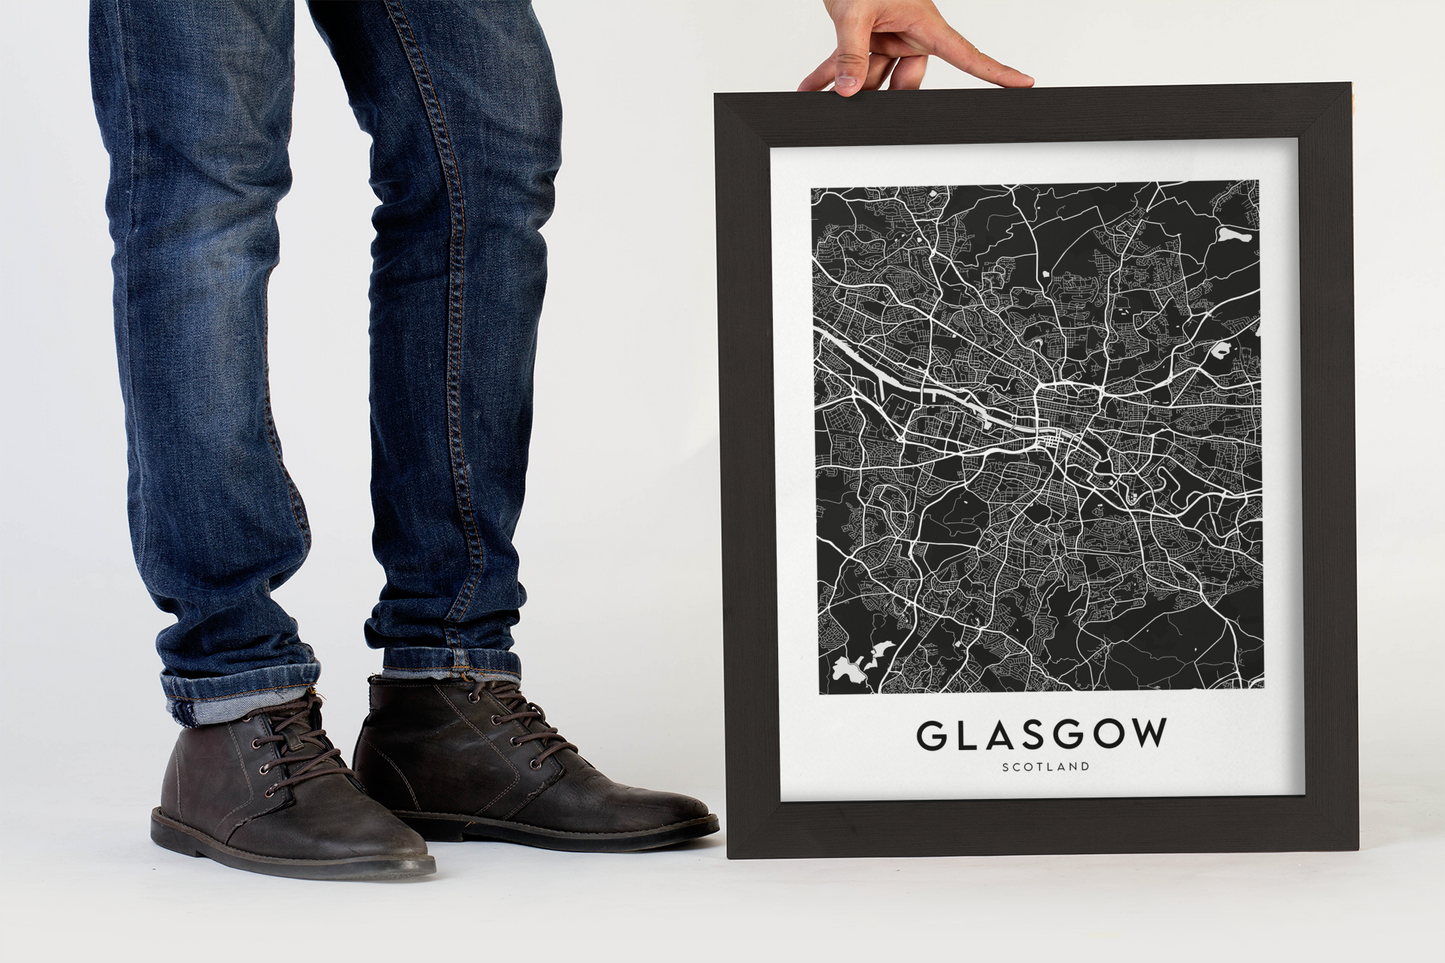 Glasgow Map (Black)